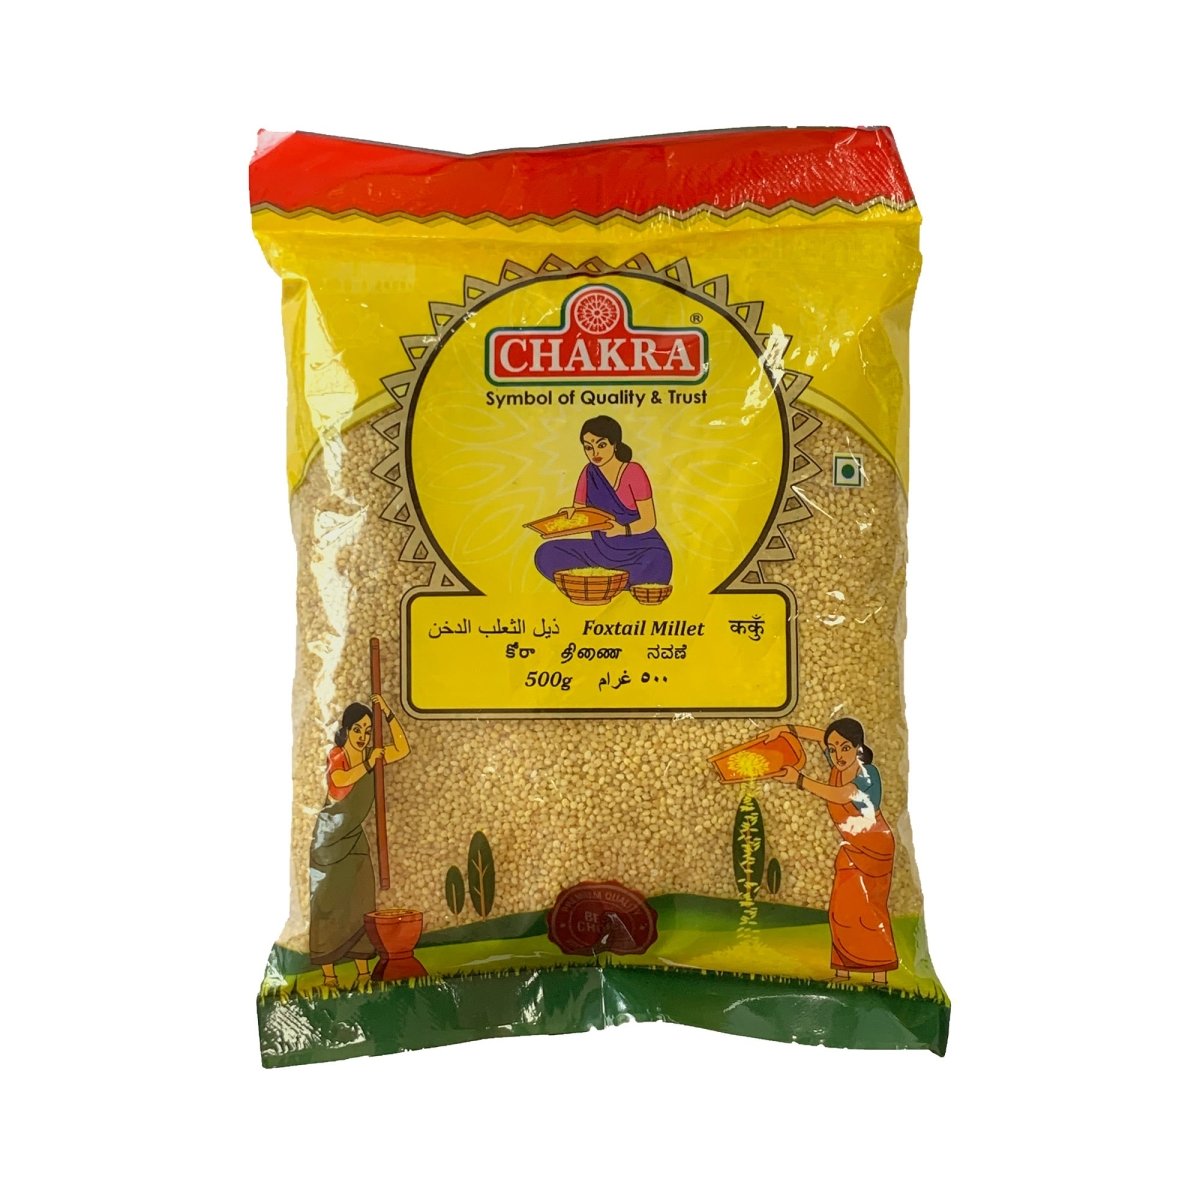 Chakra Foxtail Millet - Tulsidas